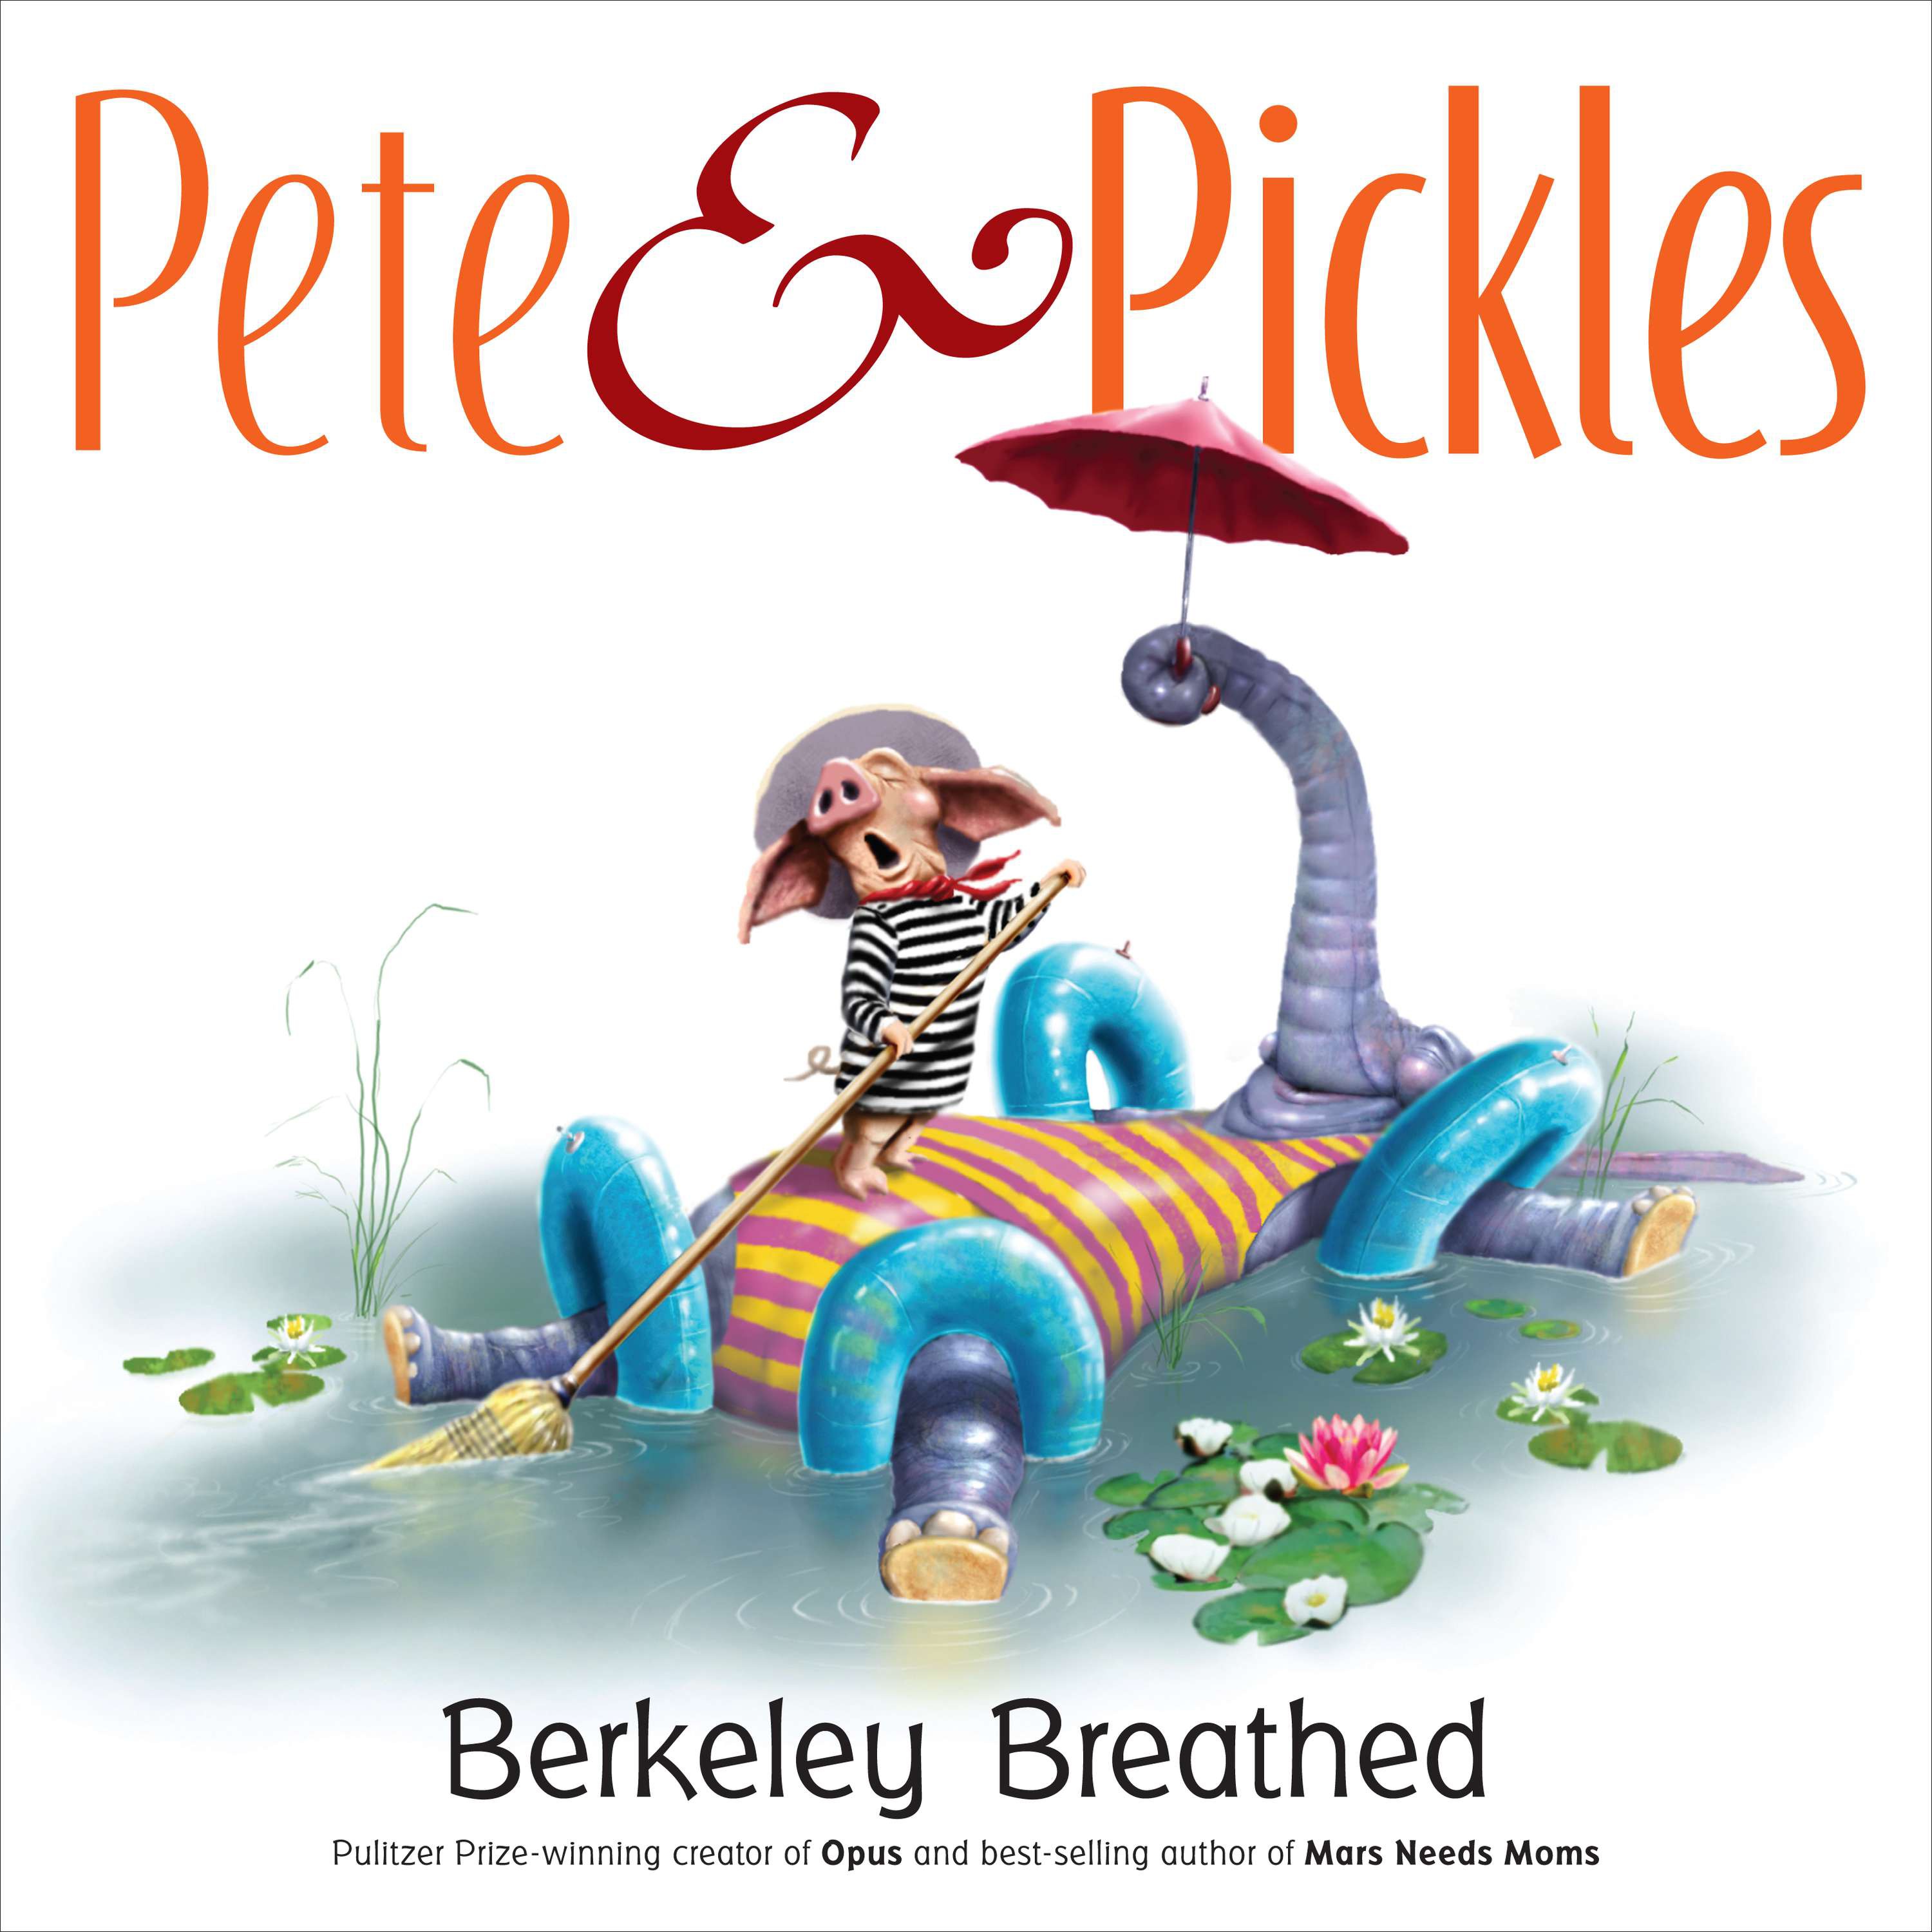 Pete & Pickles - 10-14.99